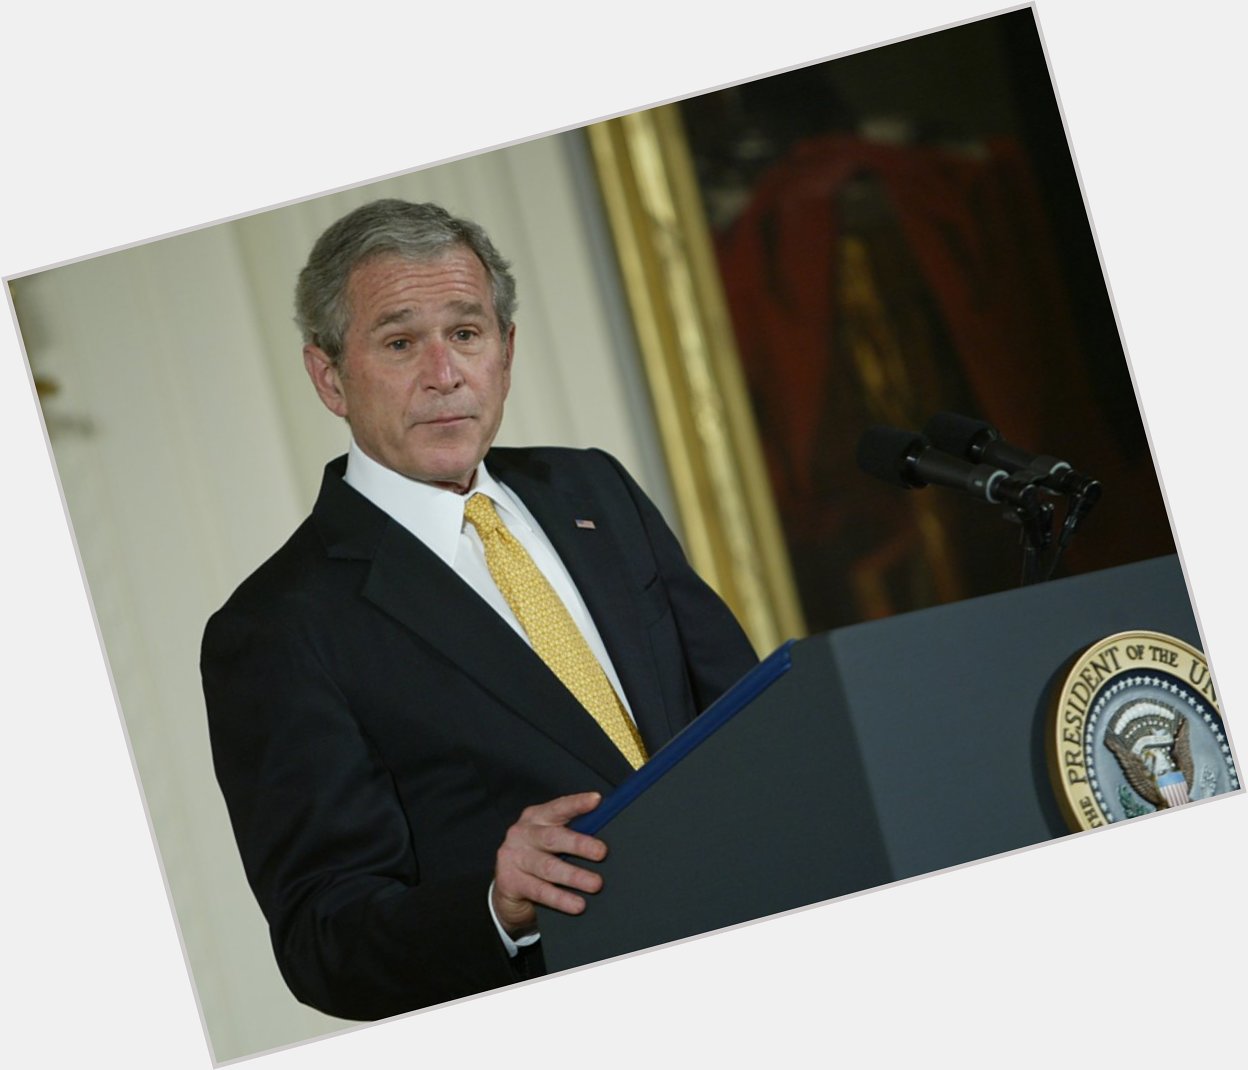 PHOTO GALLERY: Happy Birthday to America\s 43rd president, George W. Bush! He\s 71  